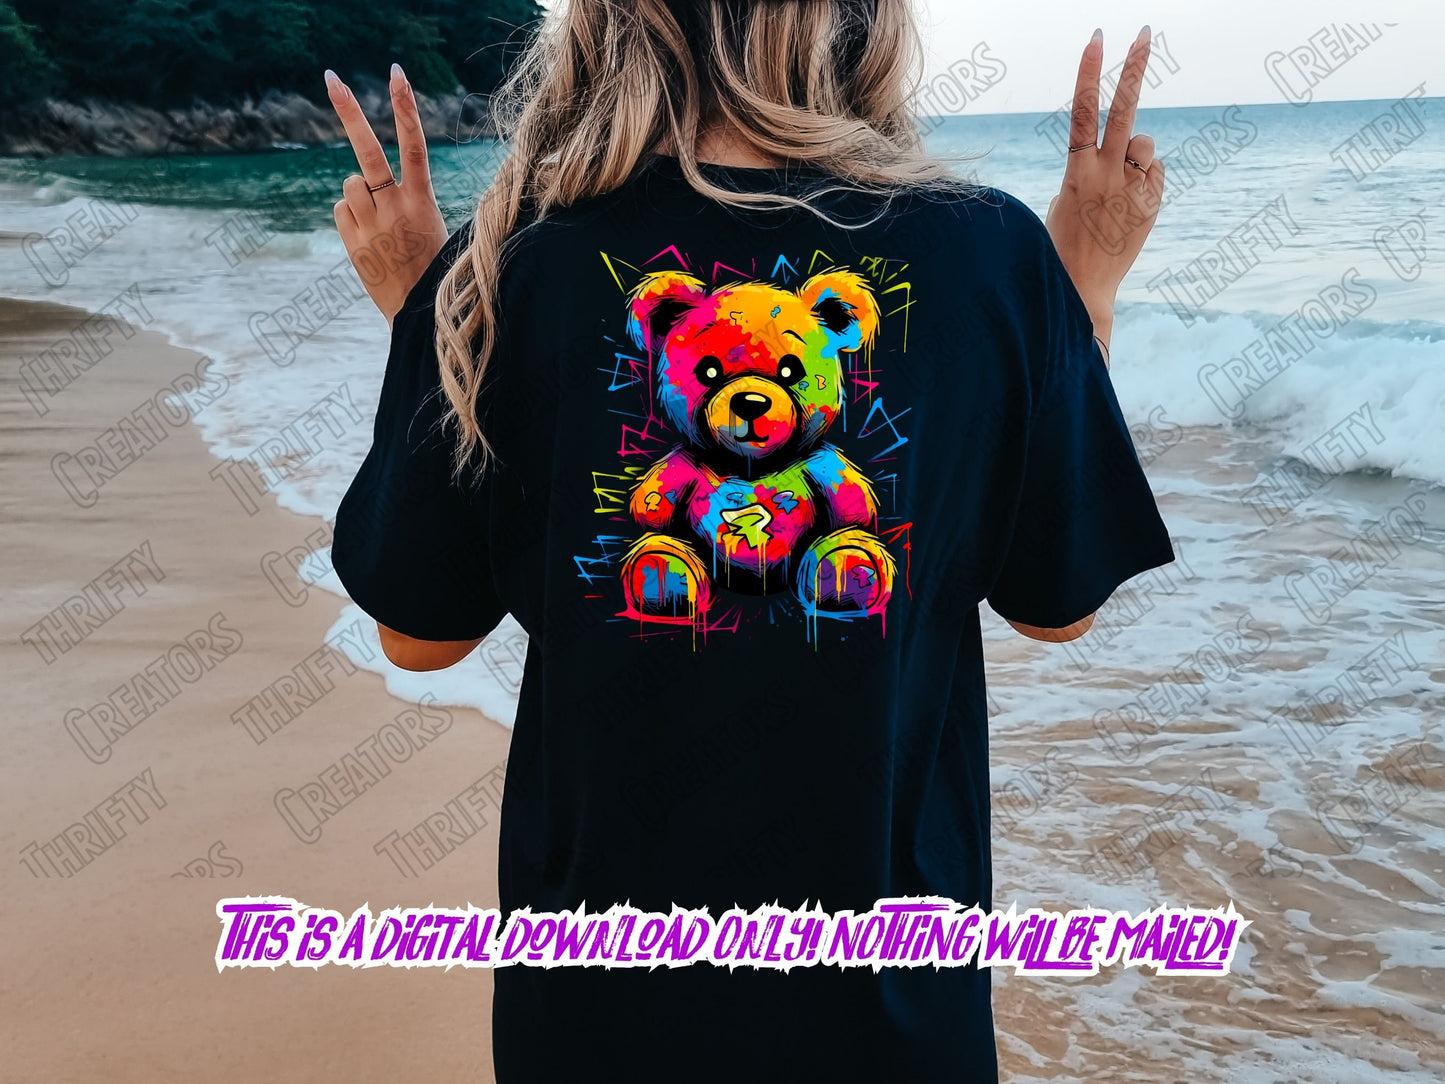 Teddy Bear png, hoodie designs, t-Shirt designs, dtf images, sublimate designs, sweatshirt design, dtf transfer png, sublimate designs kid